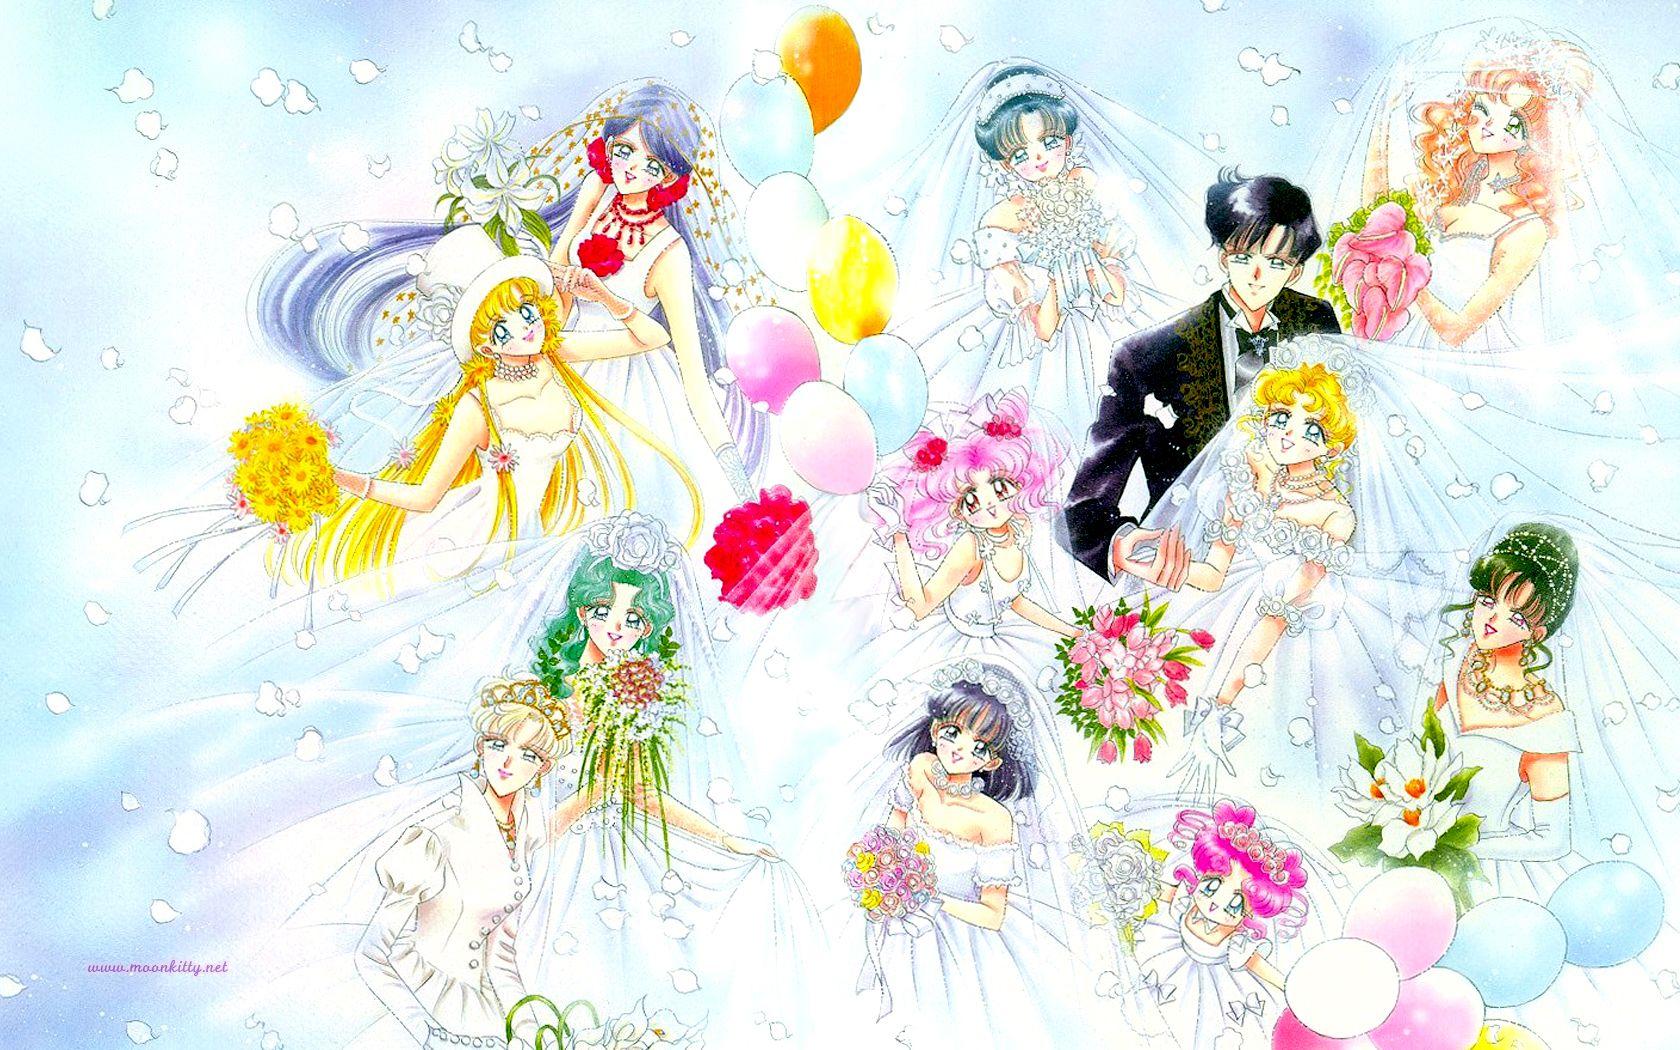 moonkitty: Sailor Moon Wallpapers Widescreen